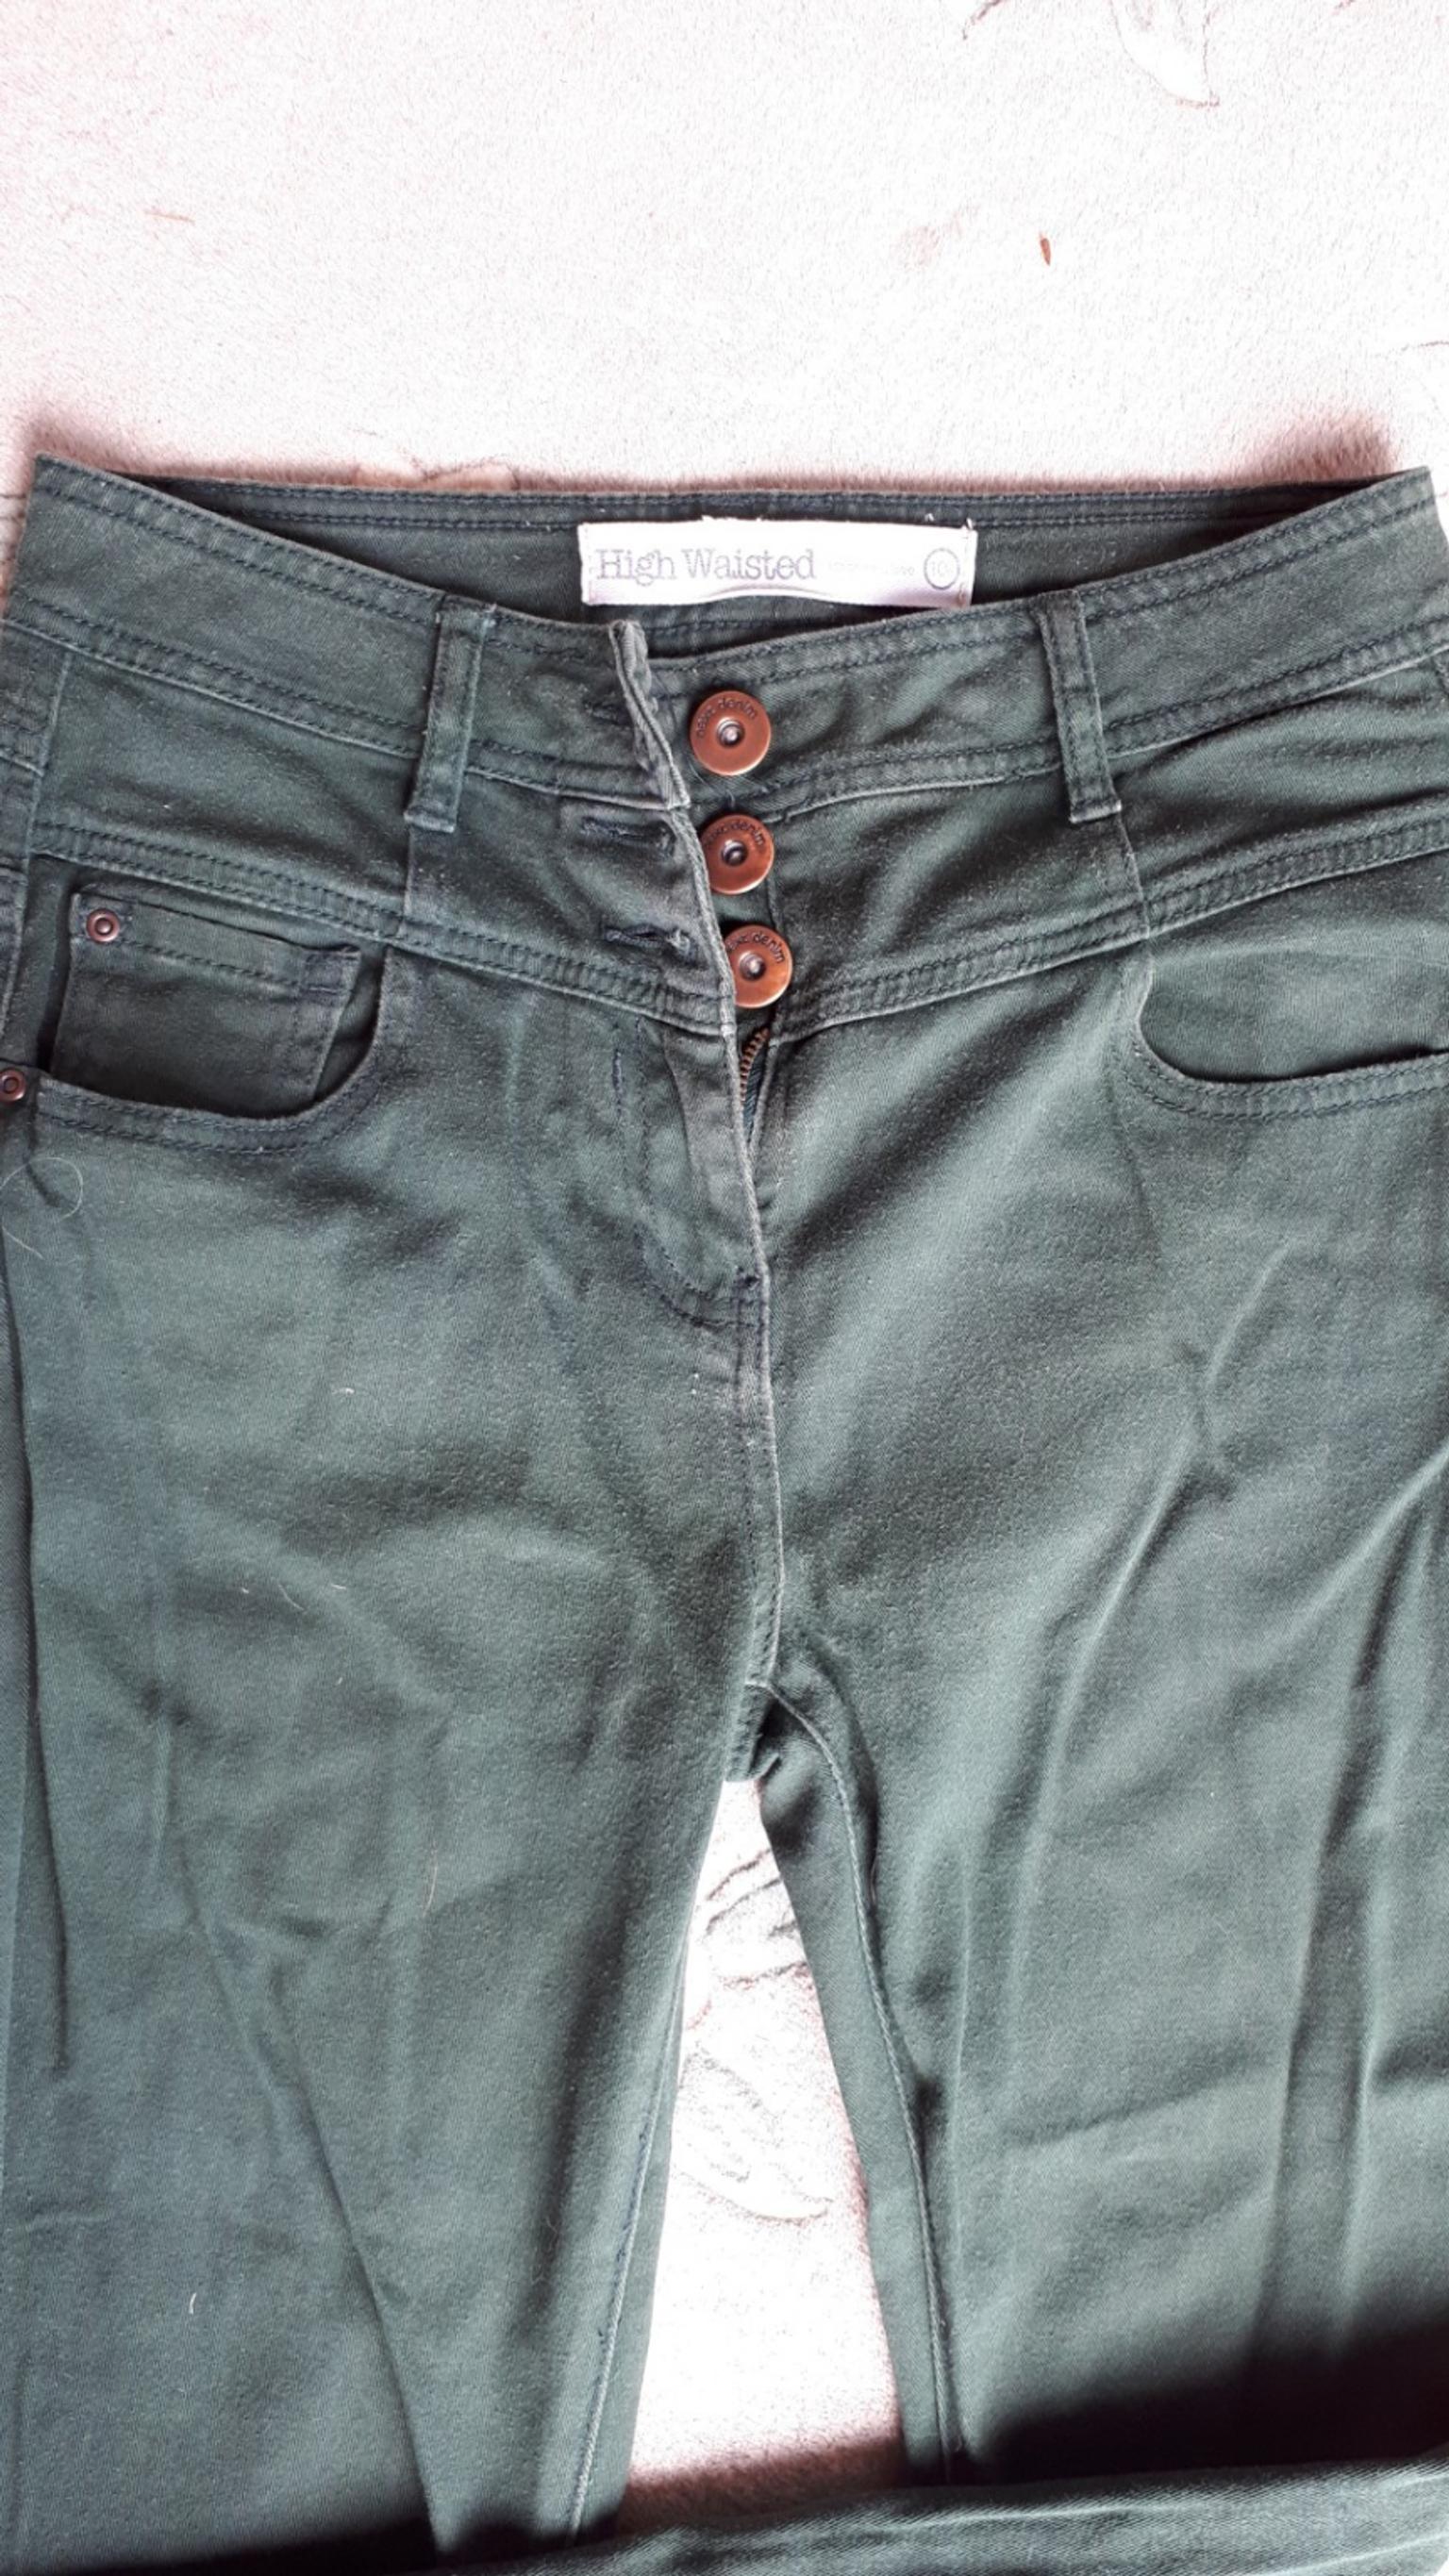 dark green high waisted jeans